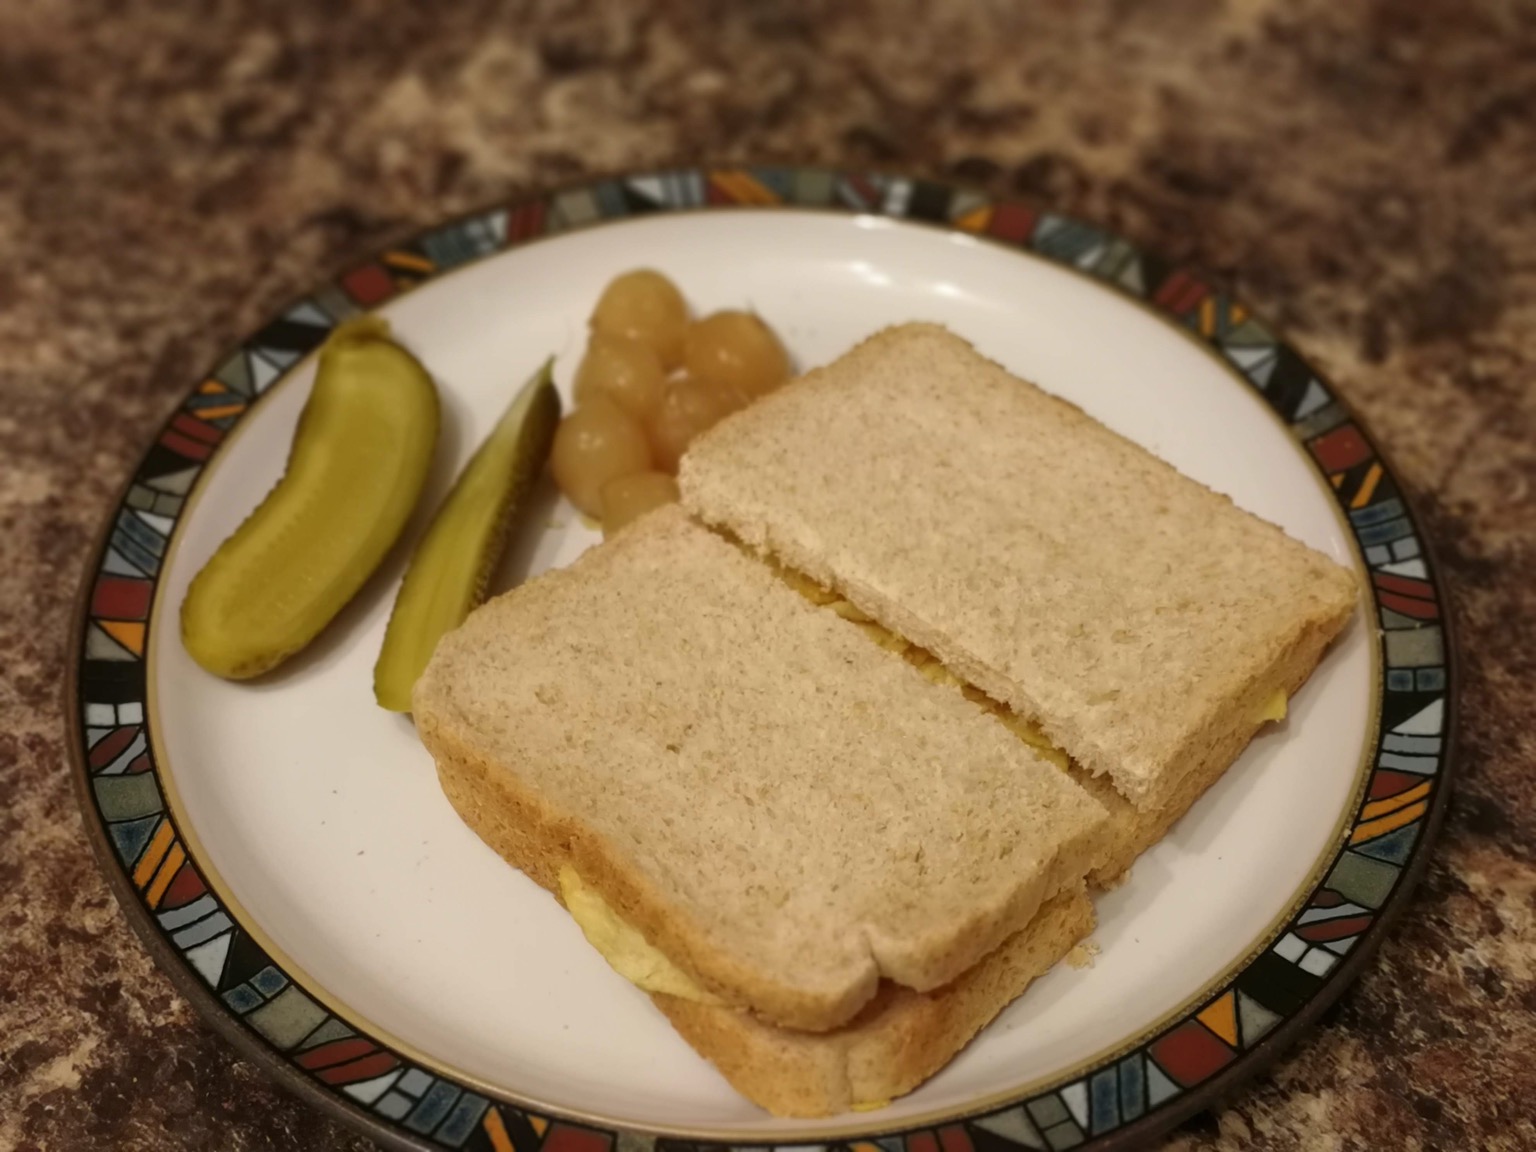 Halved brown crisp sandwich alongside pickles